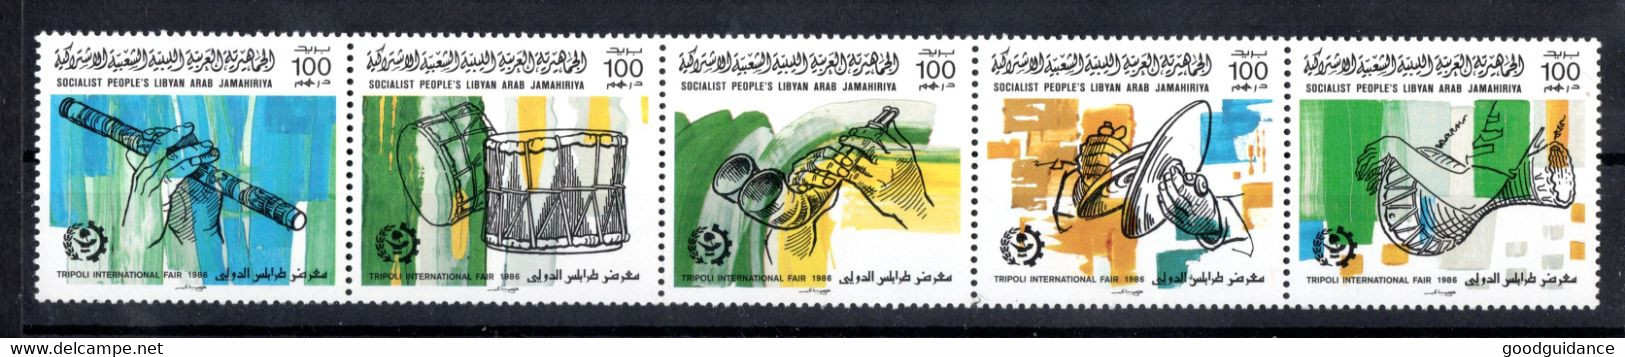 1986 - Libya - The 24th International Trade Fair, Tripoli - Musical Instruments - Strip Of 5 Stamps - MNH** - Libya